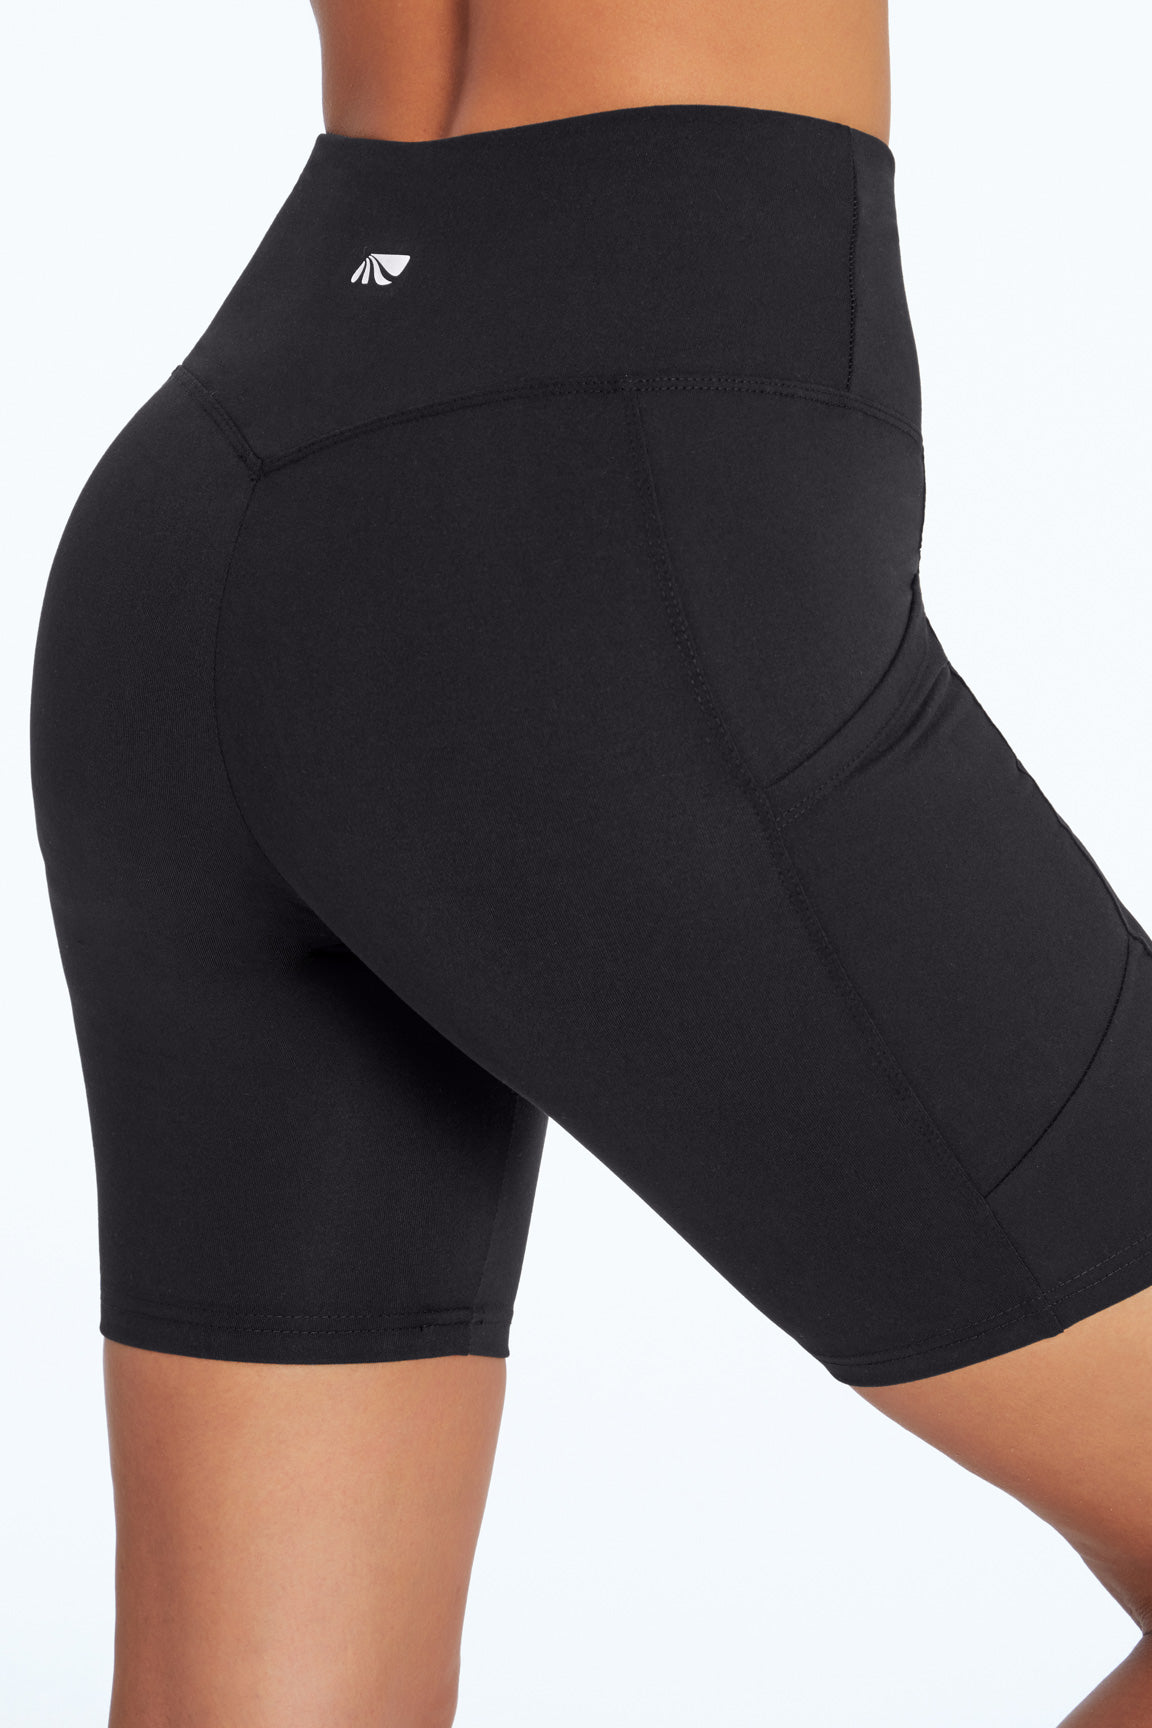 Nebility High Waisted Biker Shorts Yoga Shorts for Women with Pocket Tummy  Control Athletic Shorts Tights(Black Small) 